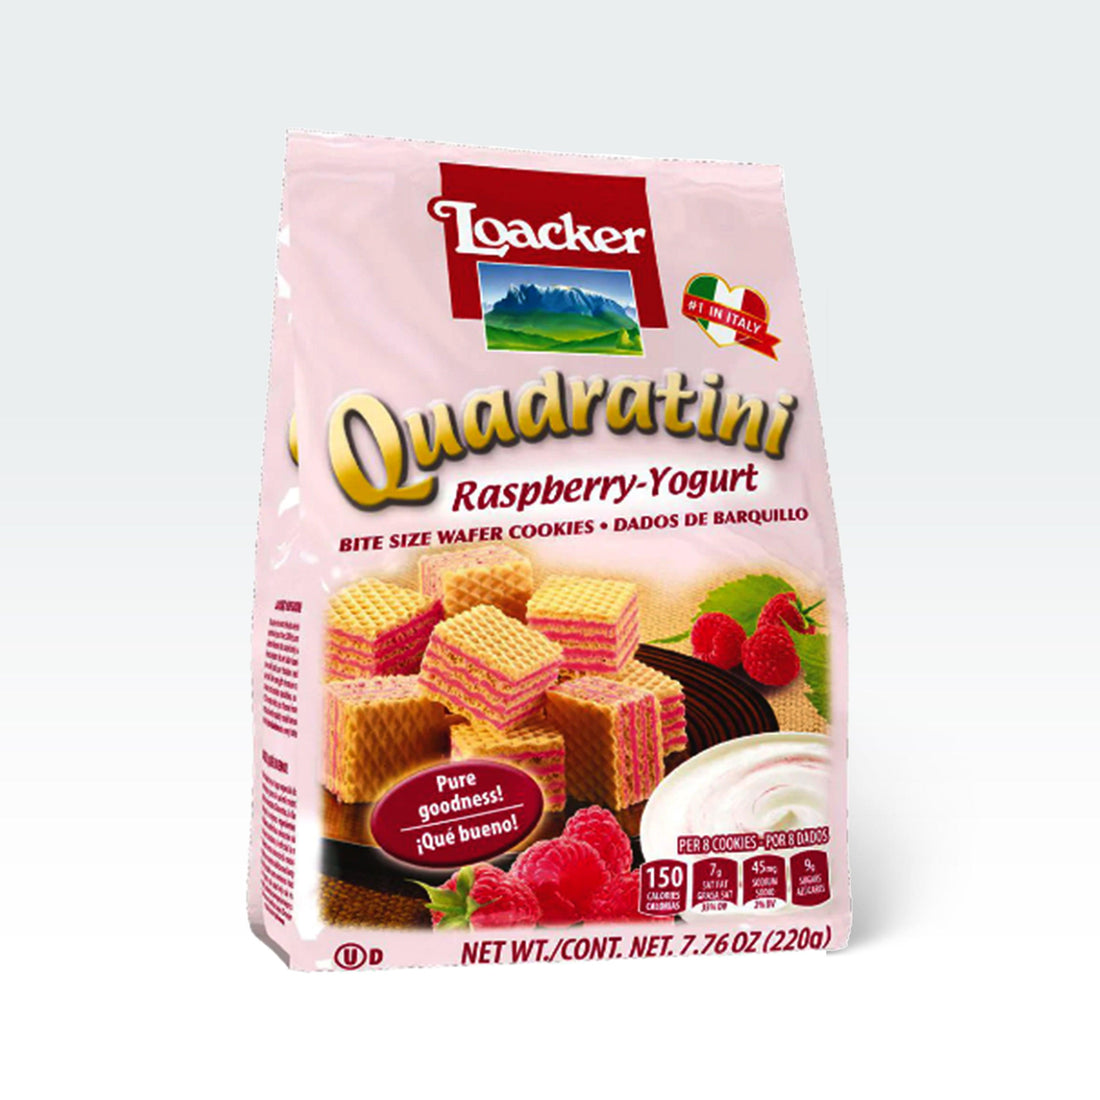 Loacker Quadratini Raspberry Yogurt 7.76oz(220g) - Anytime Basket